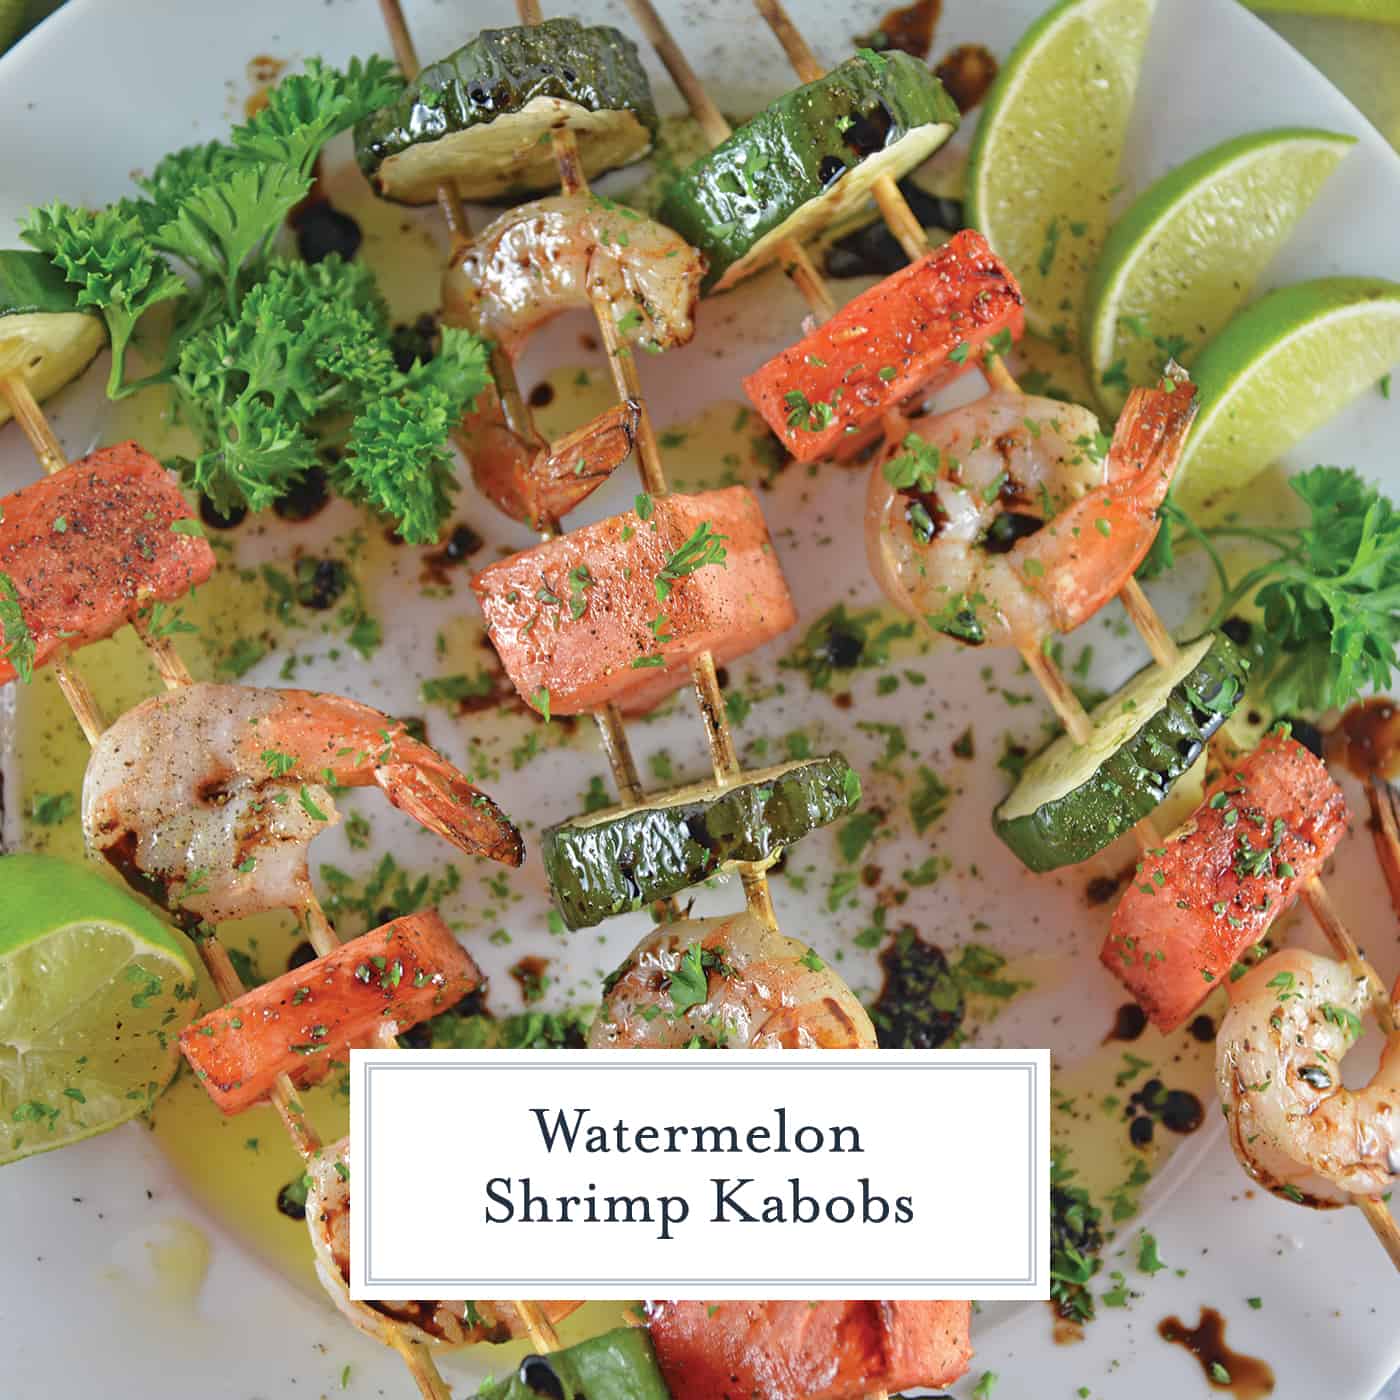 Watermelon Shrimp Kabobs combine grilled shrimp with grilled watermelon with a sweet balsamic reduction and zesty lime. A healthy kabob recipe on the grill. #grilledwatermelon #kabobrecipes www.savoryexperiments.com 